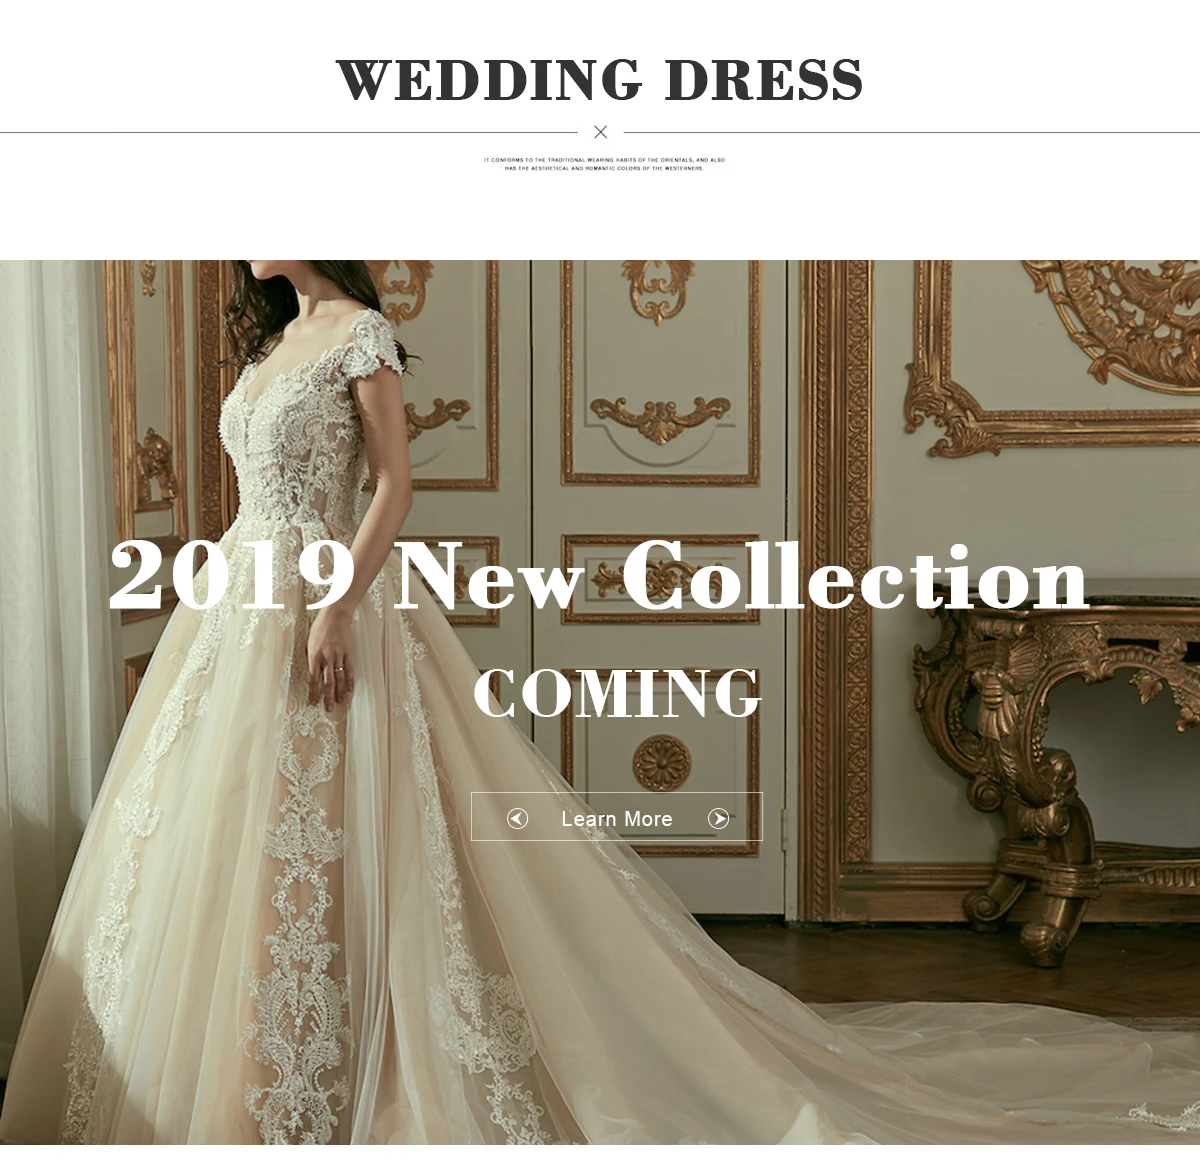 Suzhou Asa Wedding&Evening Dress Co., Ltd. - Wedding Dress, Evening Dress